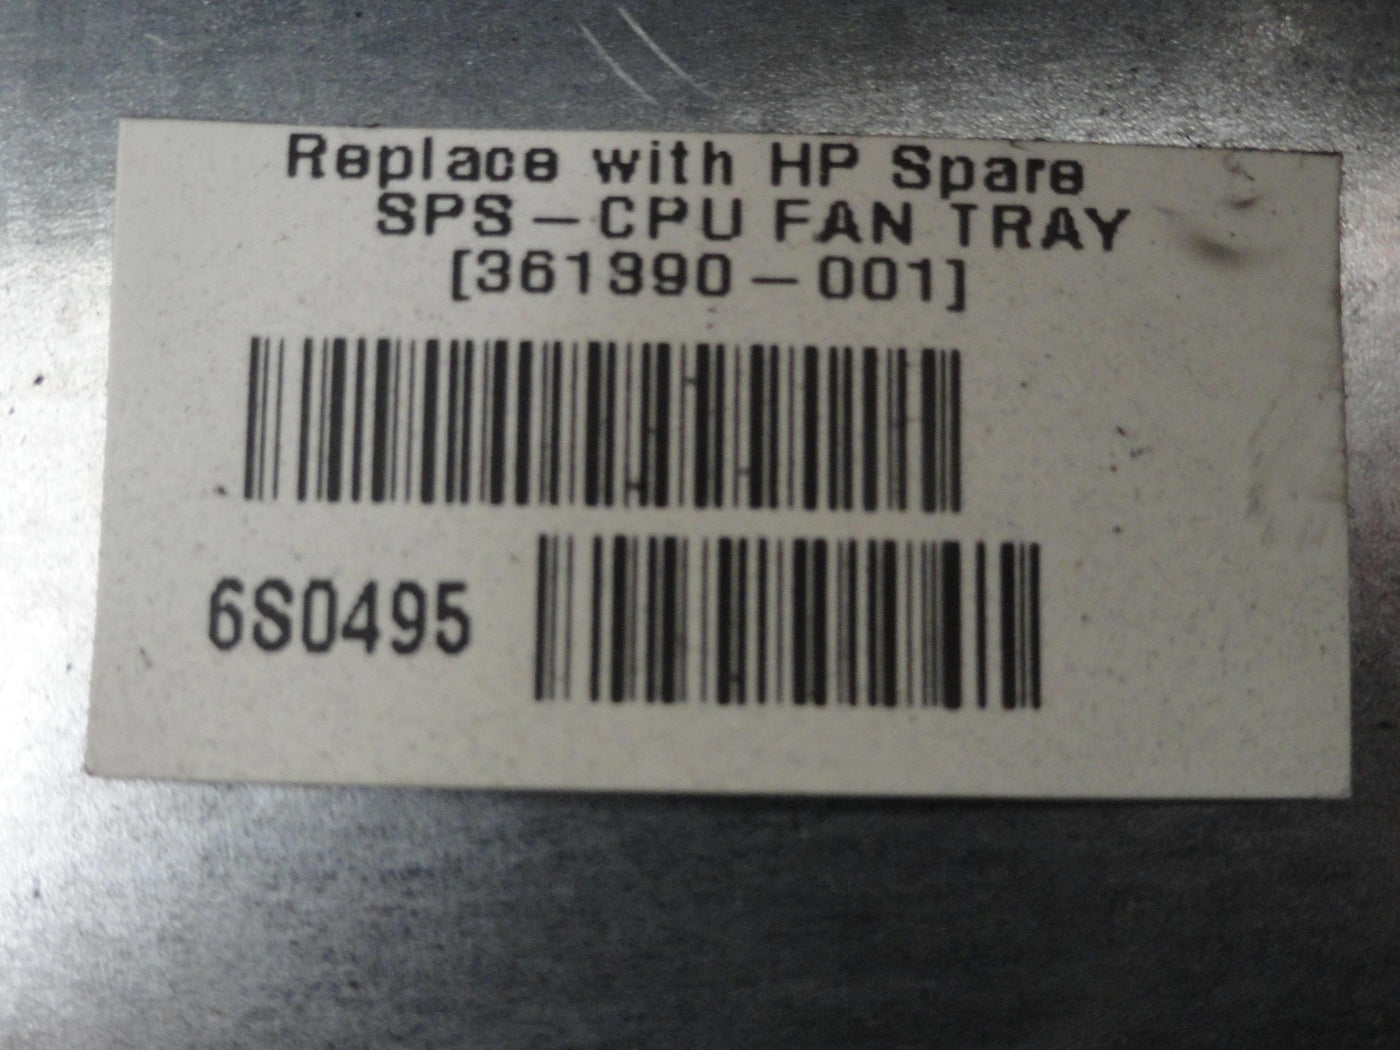 PR16953_361390-001_HP Proliant DL360 Front Fan Tray Assembly - Image2